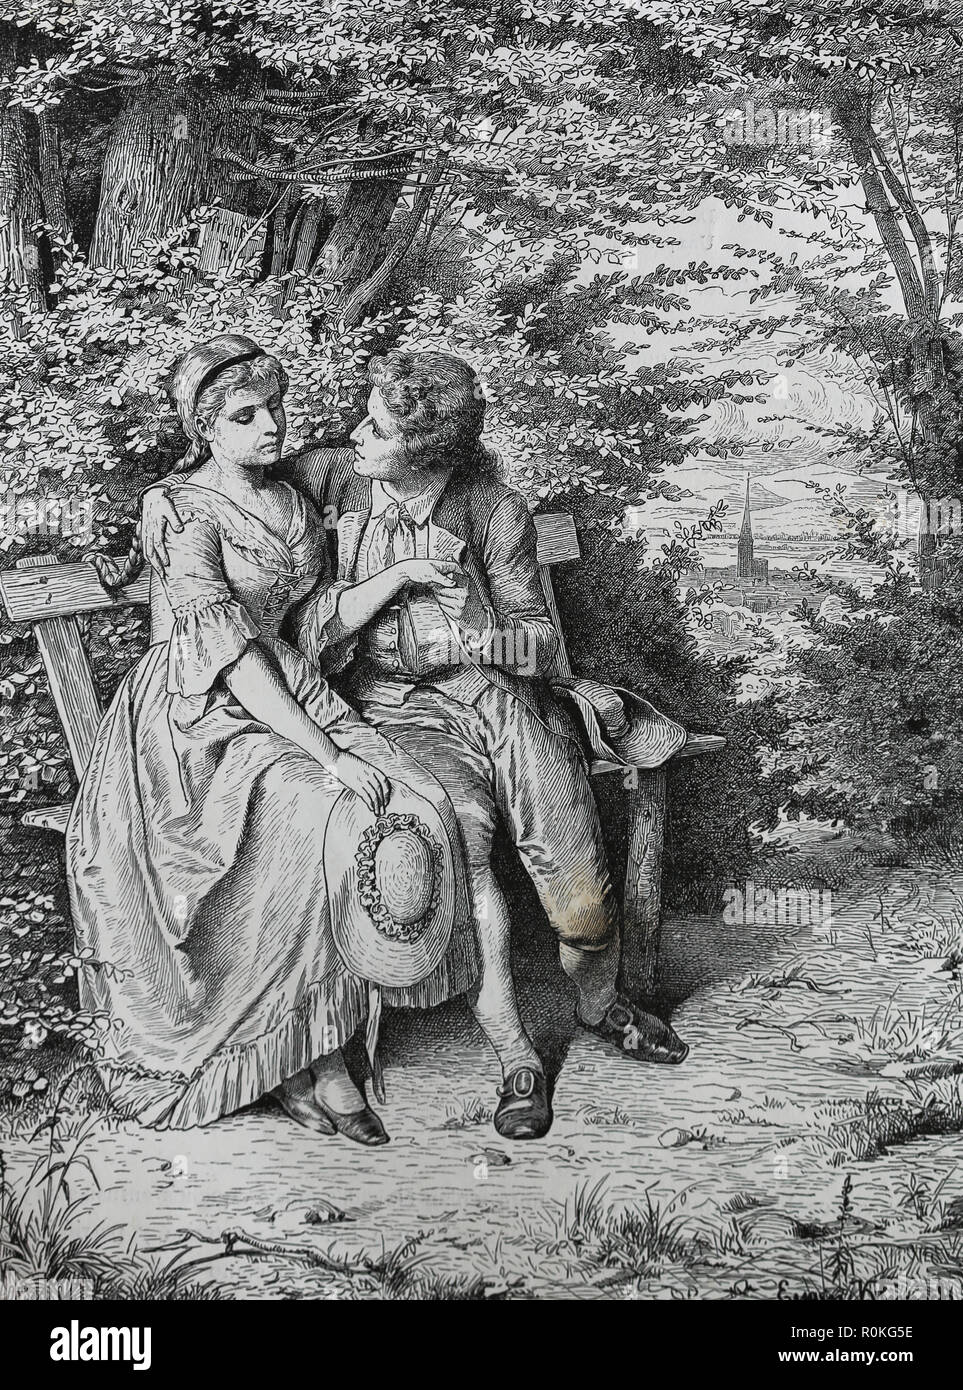 Scrittore tedesco Johann Wolfgang von Goethe (Francoforte sul Meno 1749 - Weimar 1832) con Friederike Brion (1752-1813). Engravin di germanio, 1882. Foto Stock